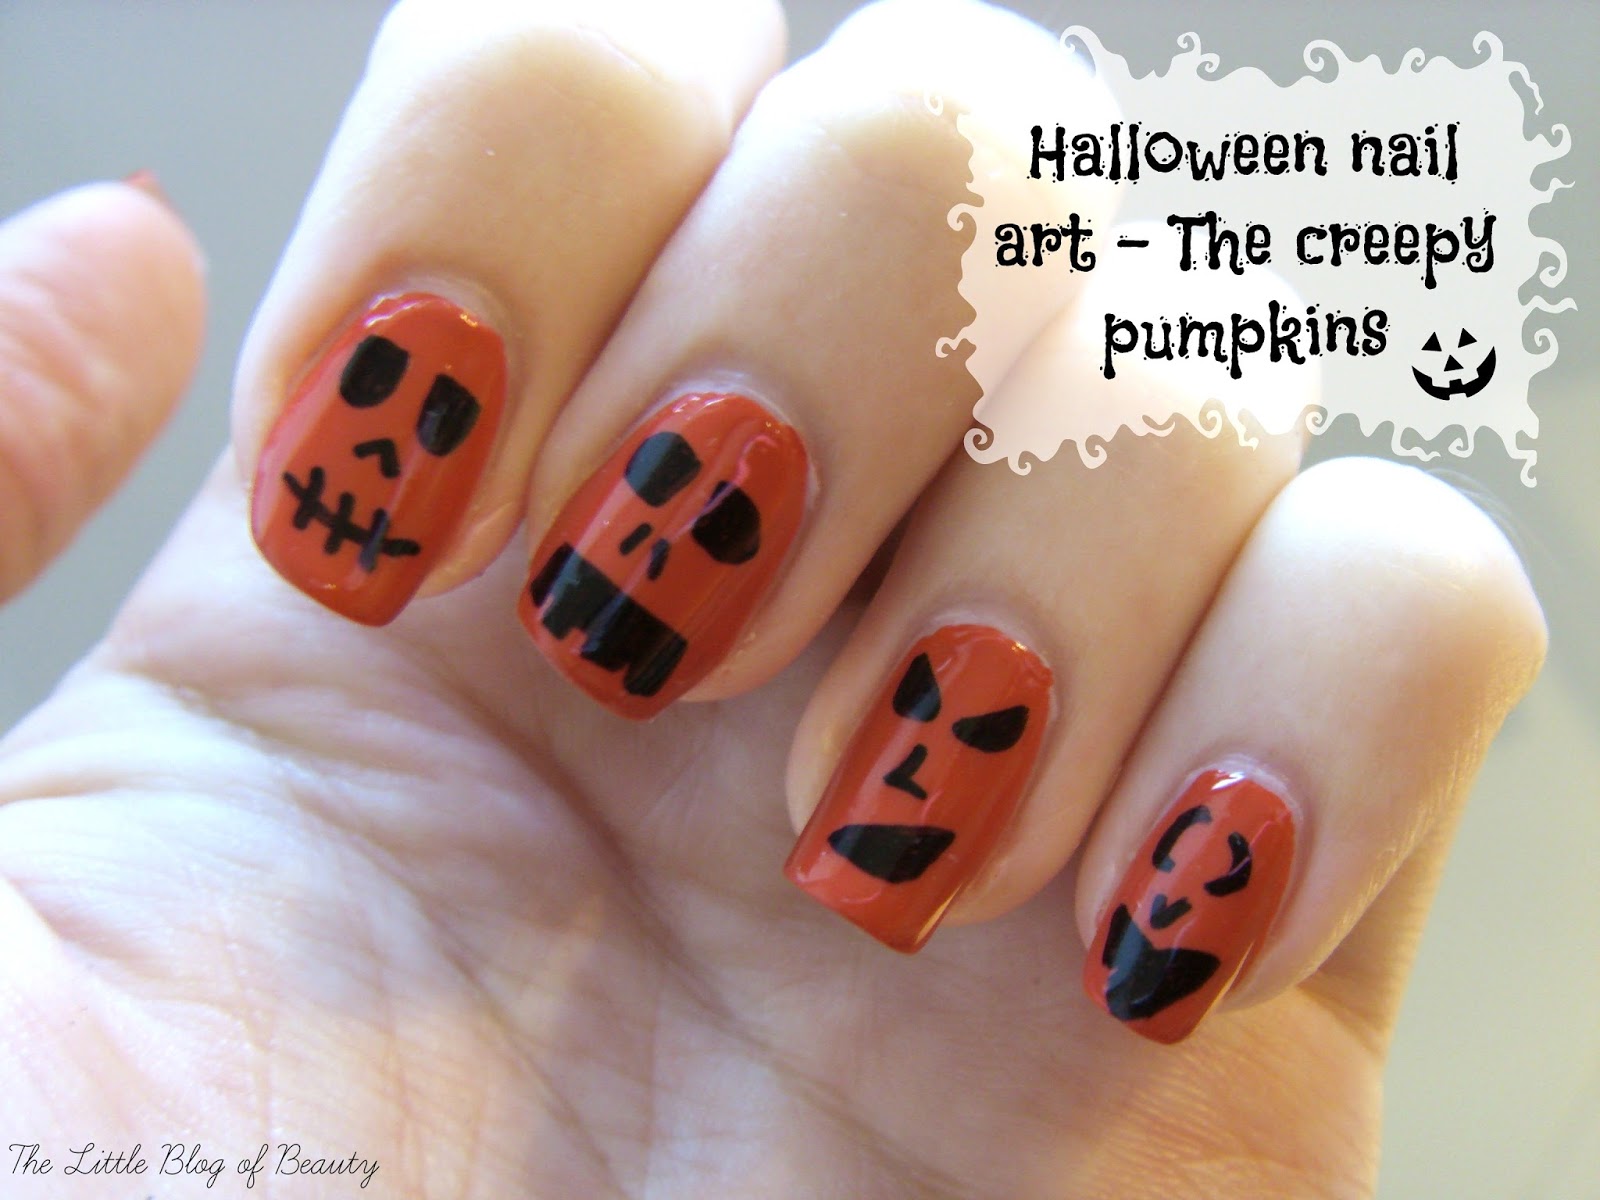 Halloween nail art - The creepy pumpkins